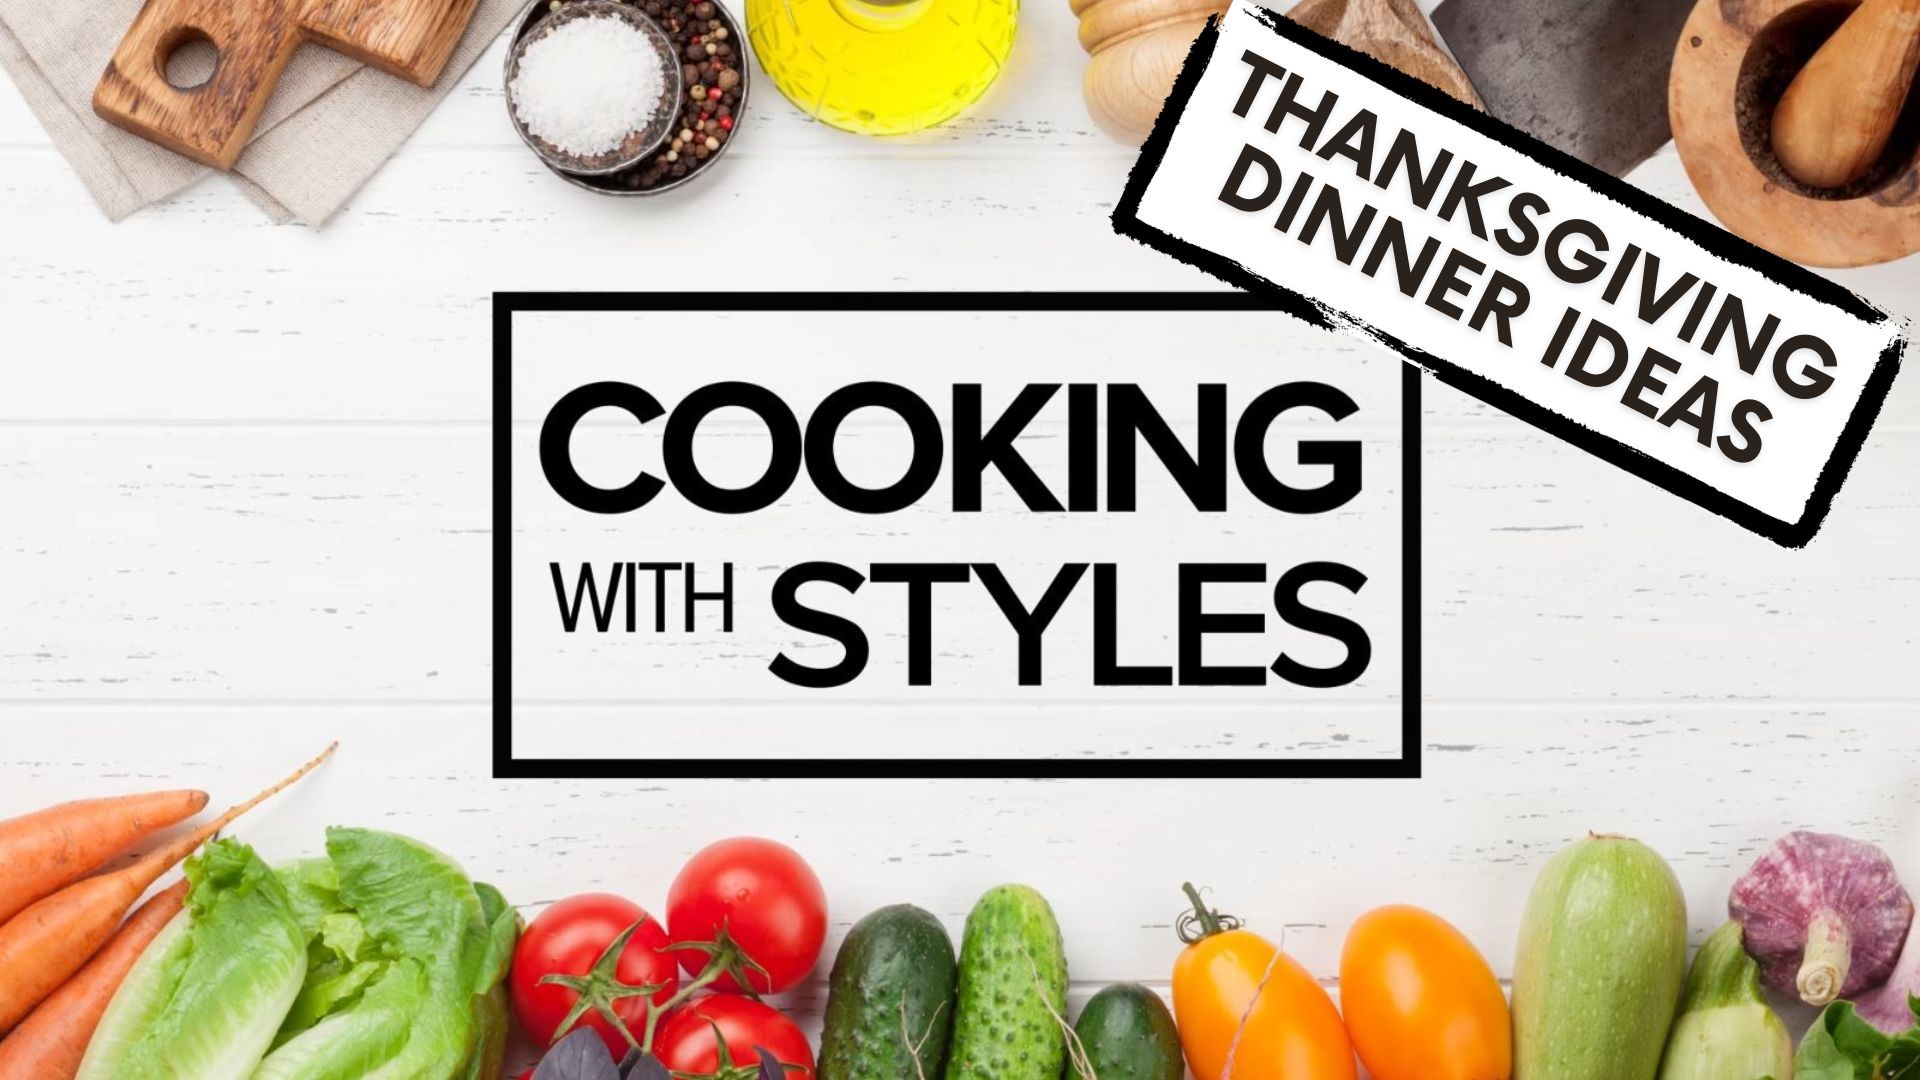 Cooking methods |  Thanksgiving dinner ideas